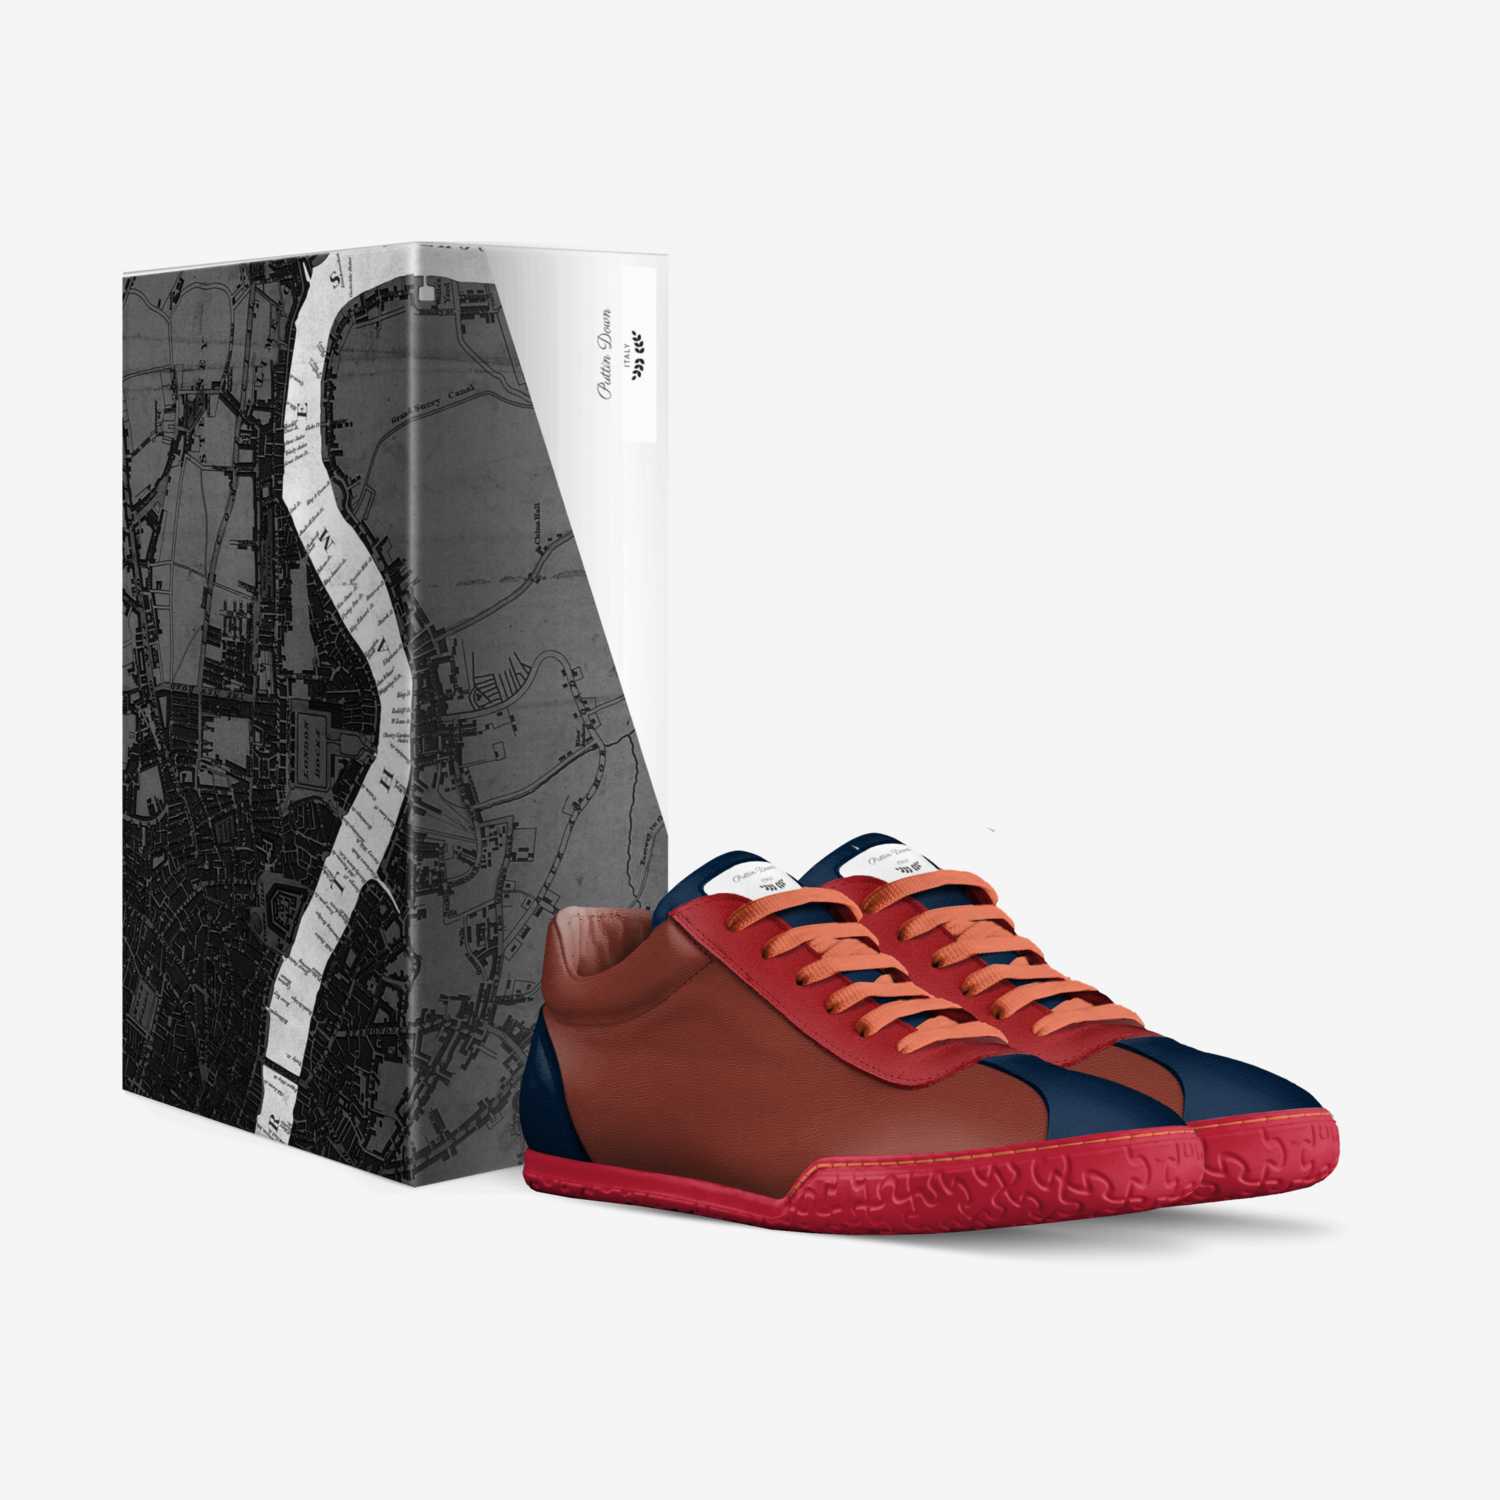 Io custom made in Italy shoes by Rashell Daniels | Box view